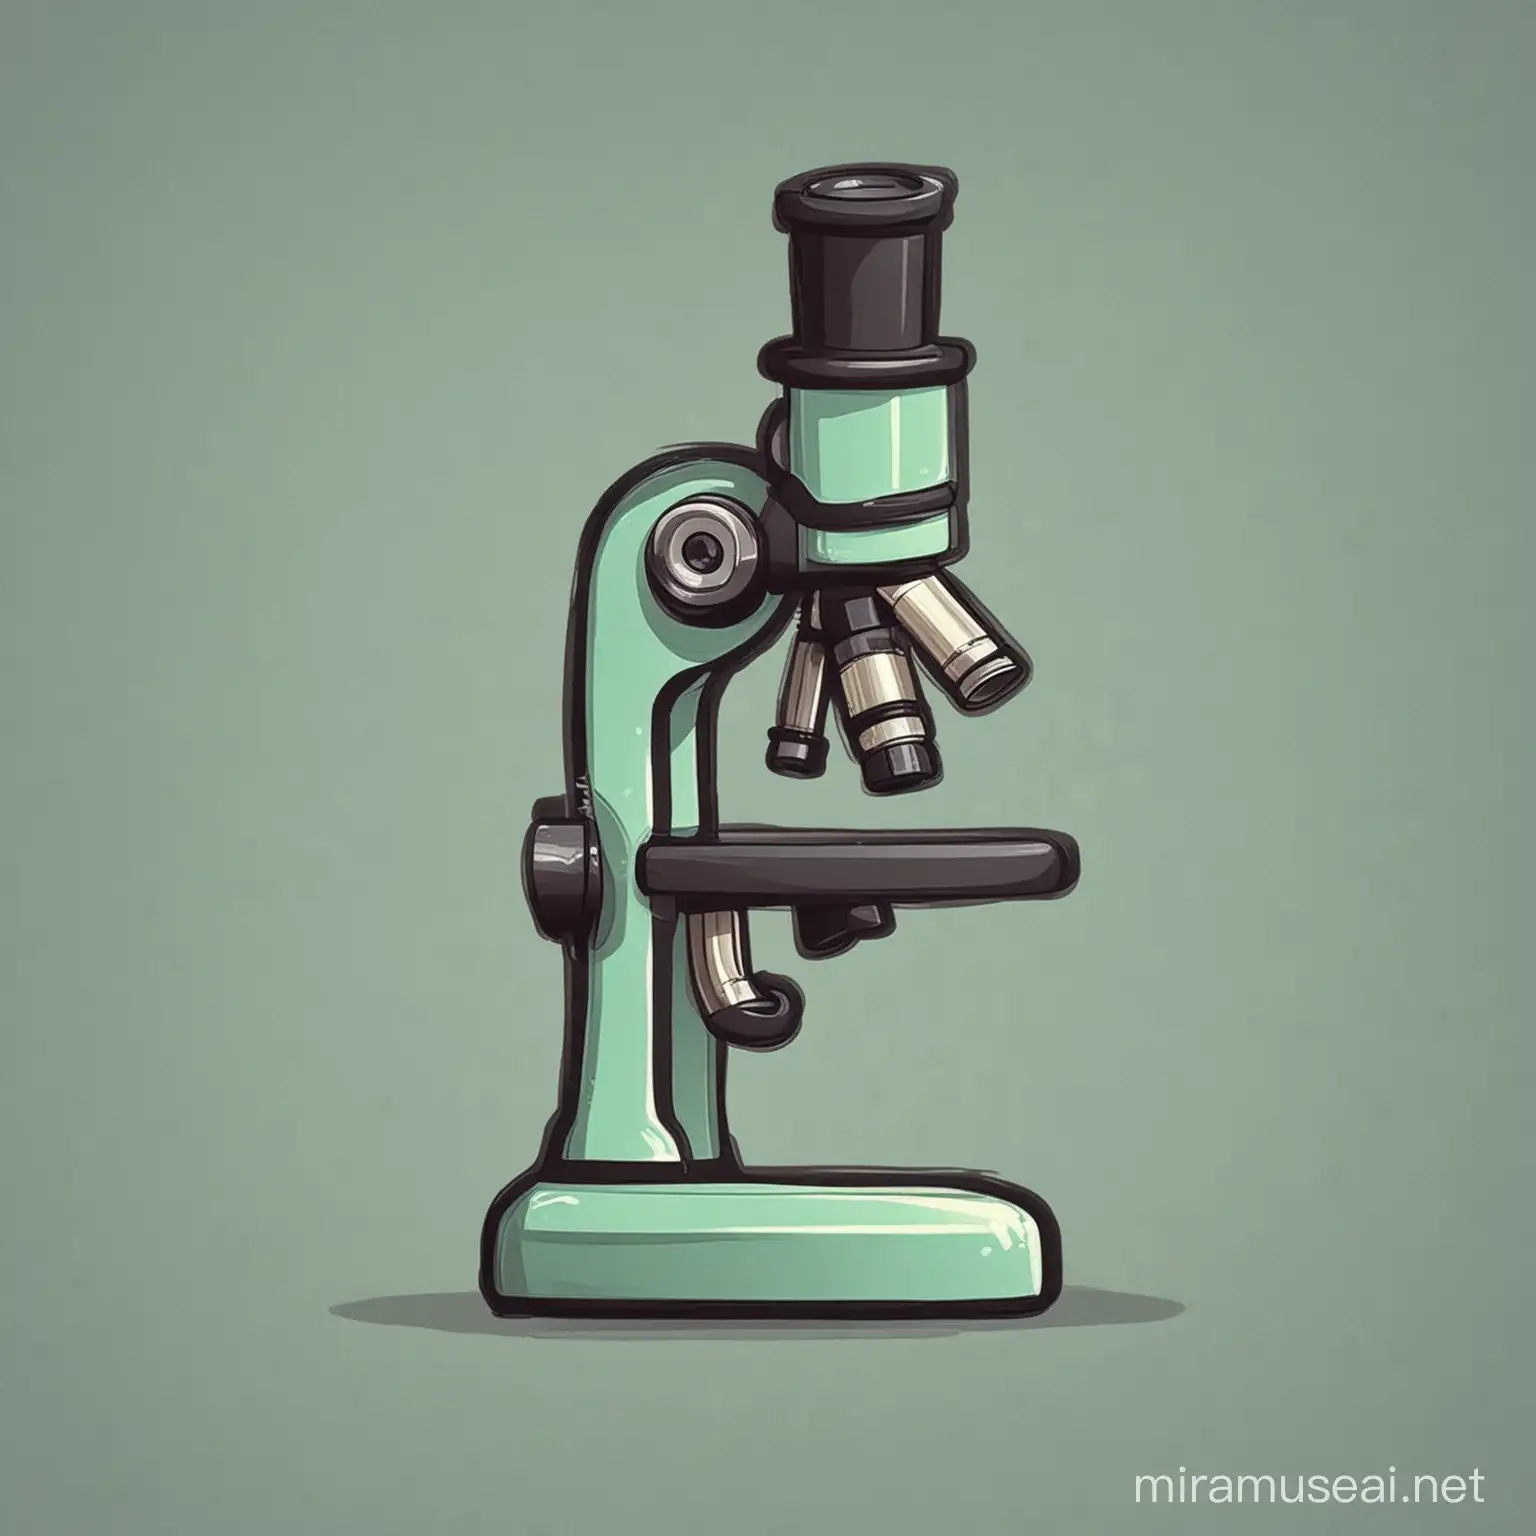 Cartoon Microscope for Educational Use